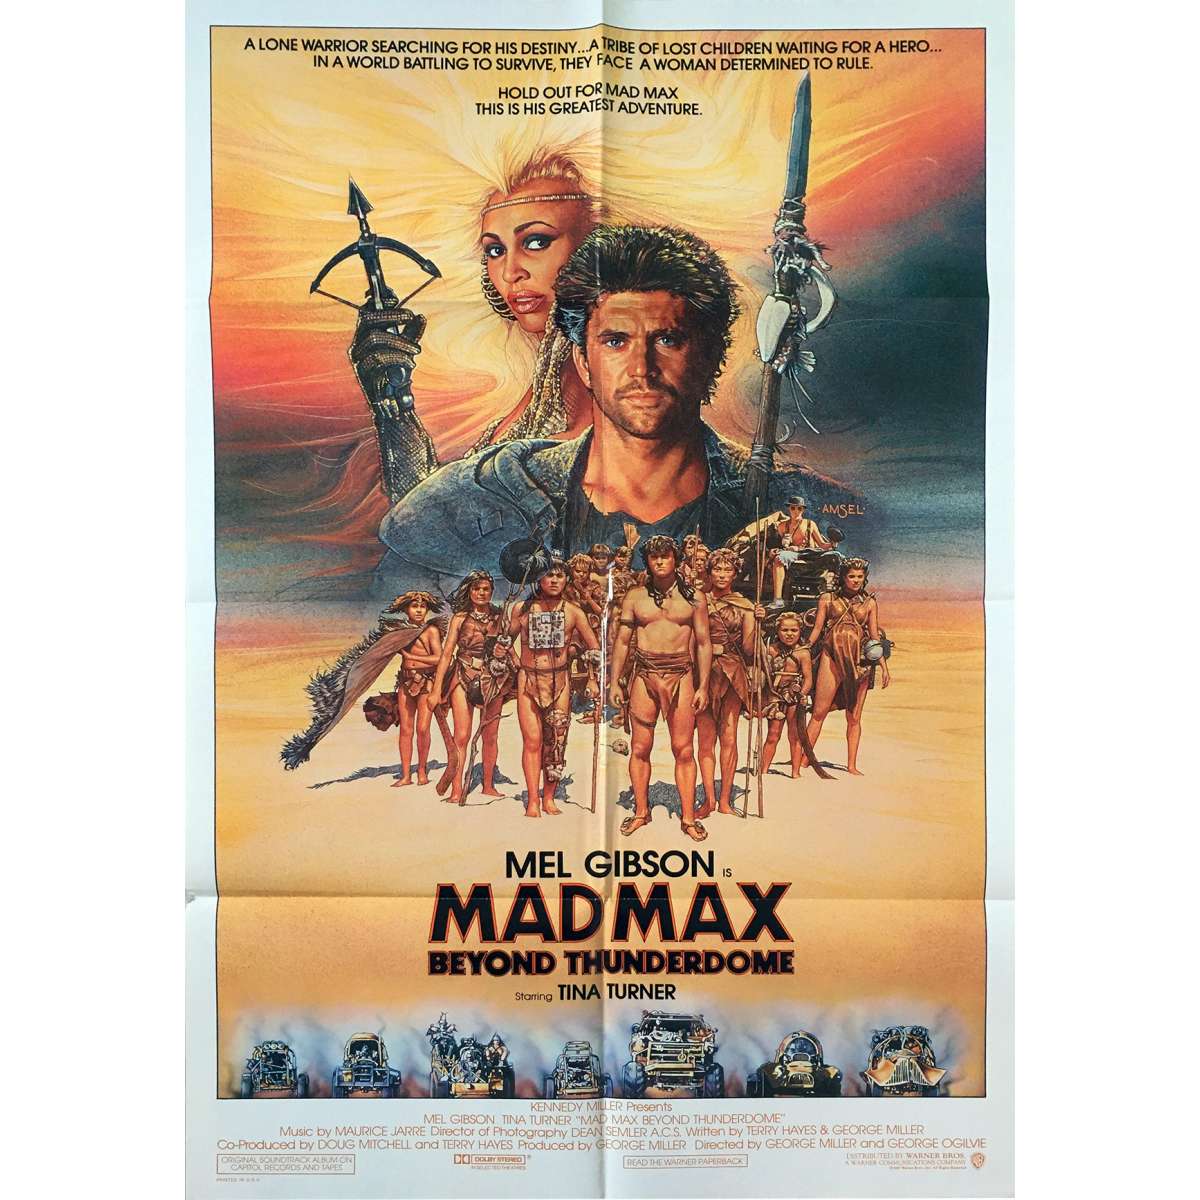 Mad Max Mel Gibson Classic Movie Art Silk Poster 13x18 24x32 inch 003 